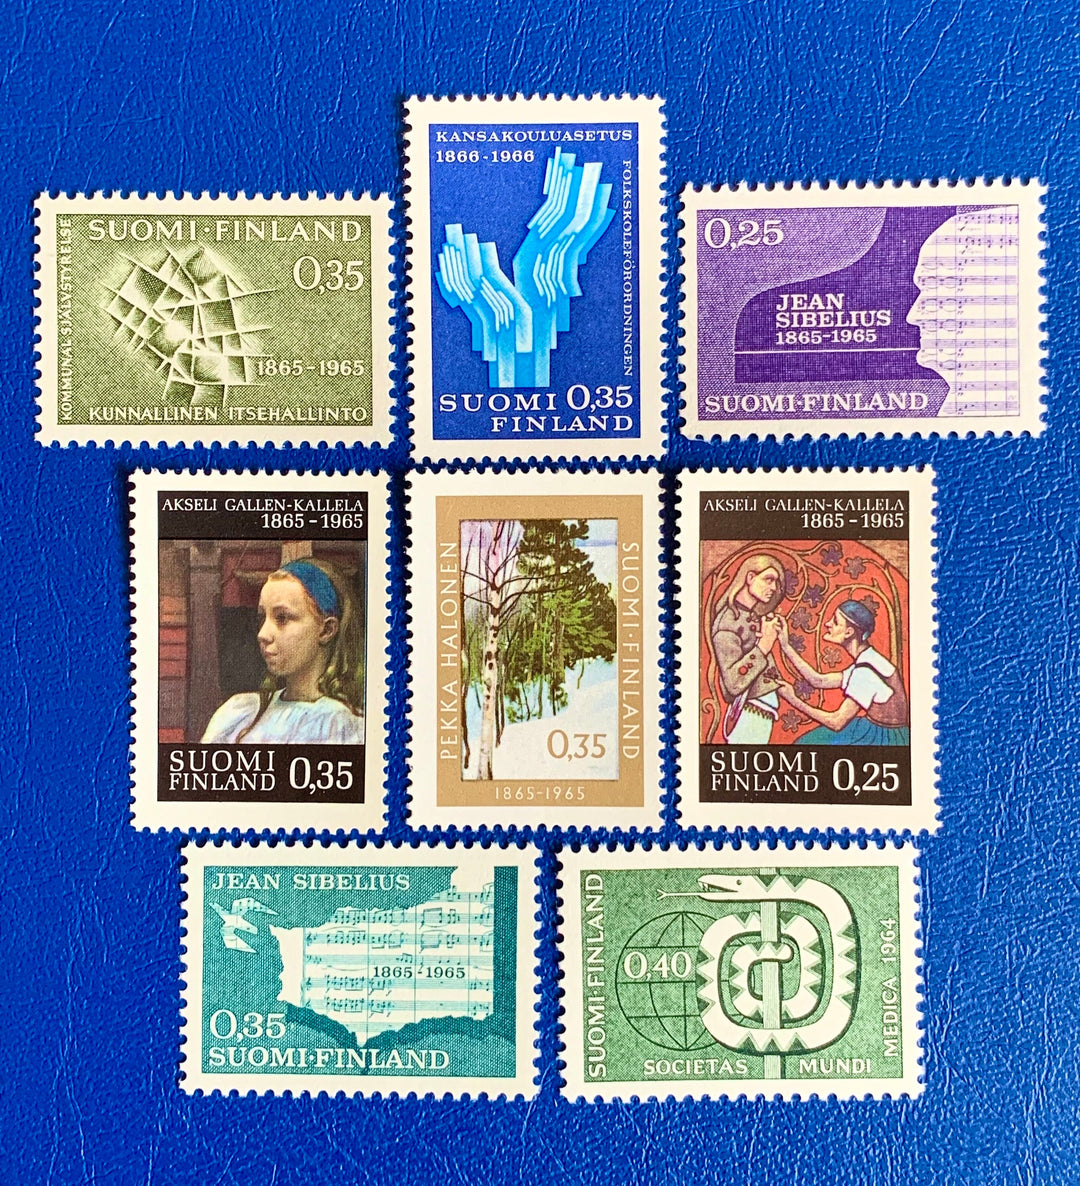 Finland -Original Vintage Postage Stamps- 1964-65 Arts & Symbols - for the collector, artist or crafter -mint no hinge